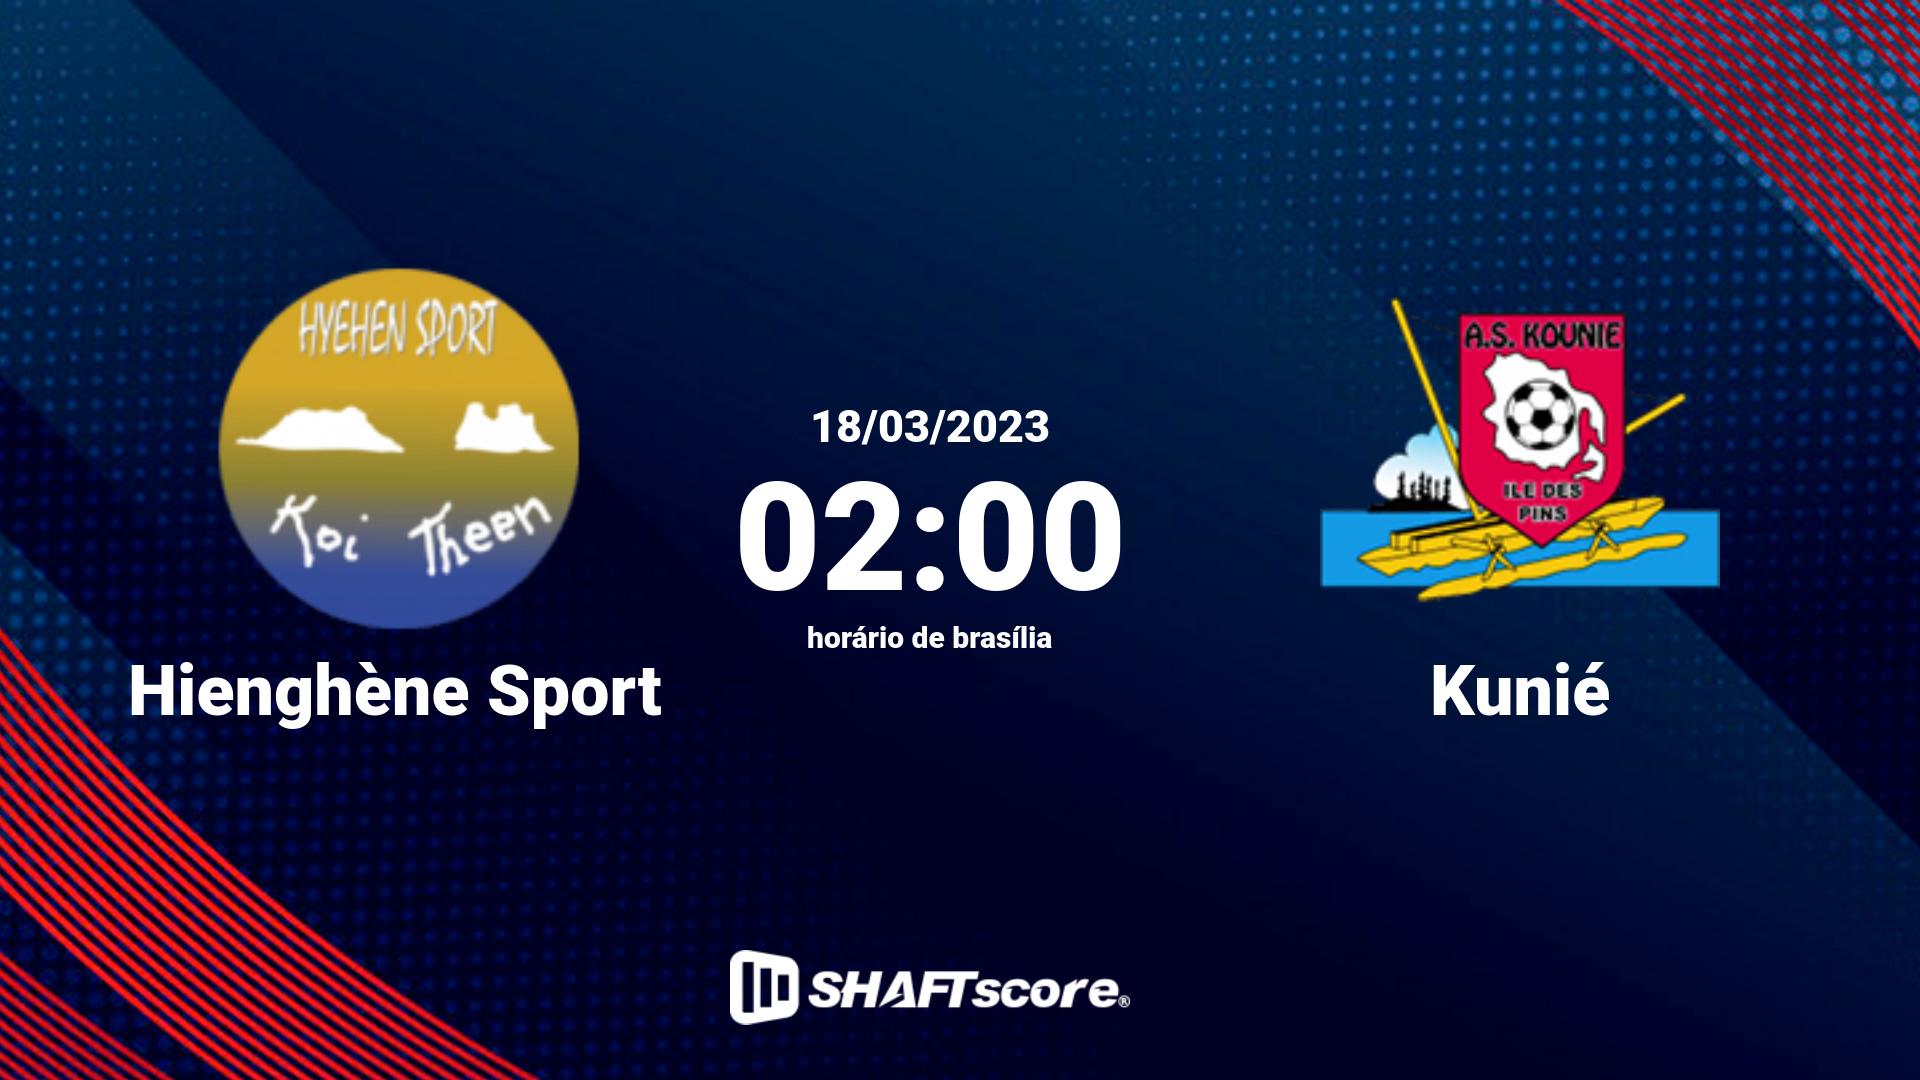 Estatísticas do jogo Hienghène Sport vs Kunié 18.03 02:00